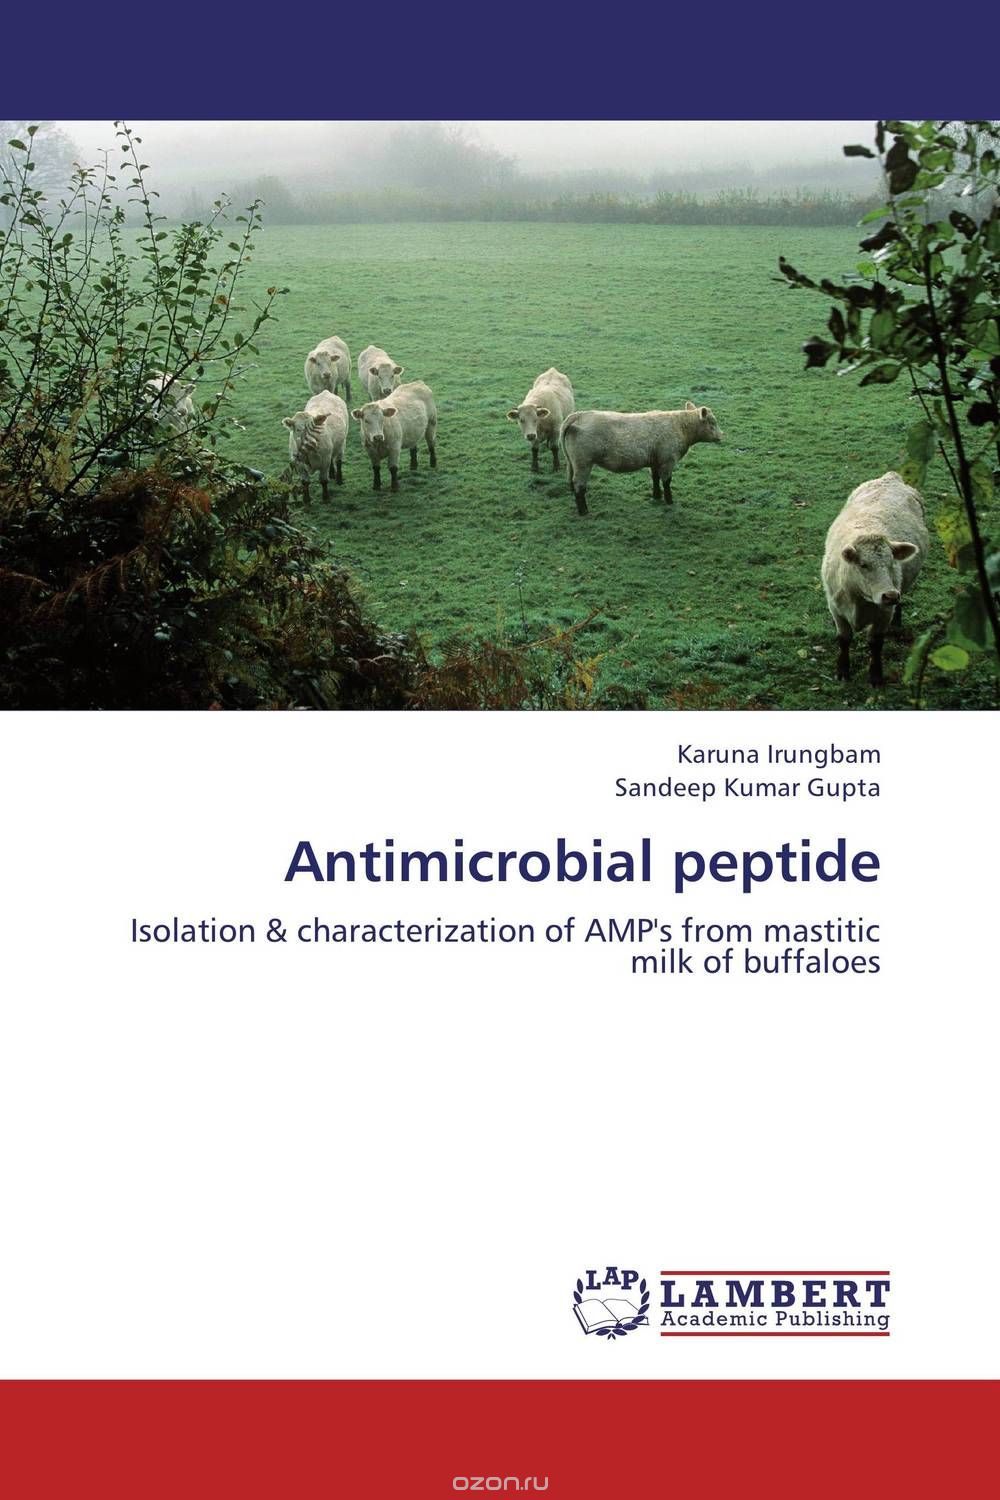 Скачать книгу "Antimicrobial peptide"